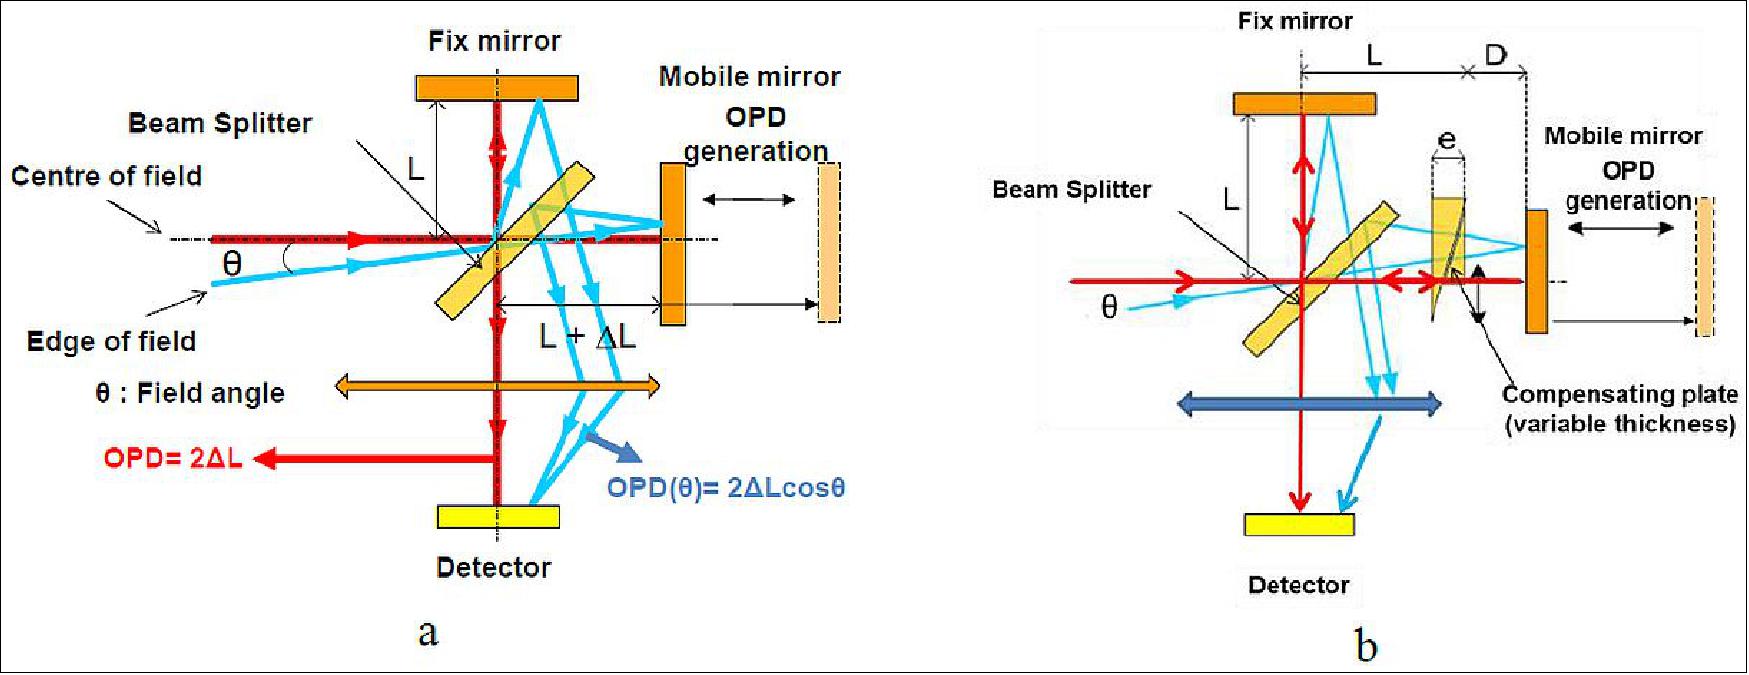 Figure 65: Michelson Interferometer principle (a) classical (b) with Mertz compensator (image credit: CNES, Airbus DS SAS)